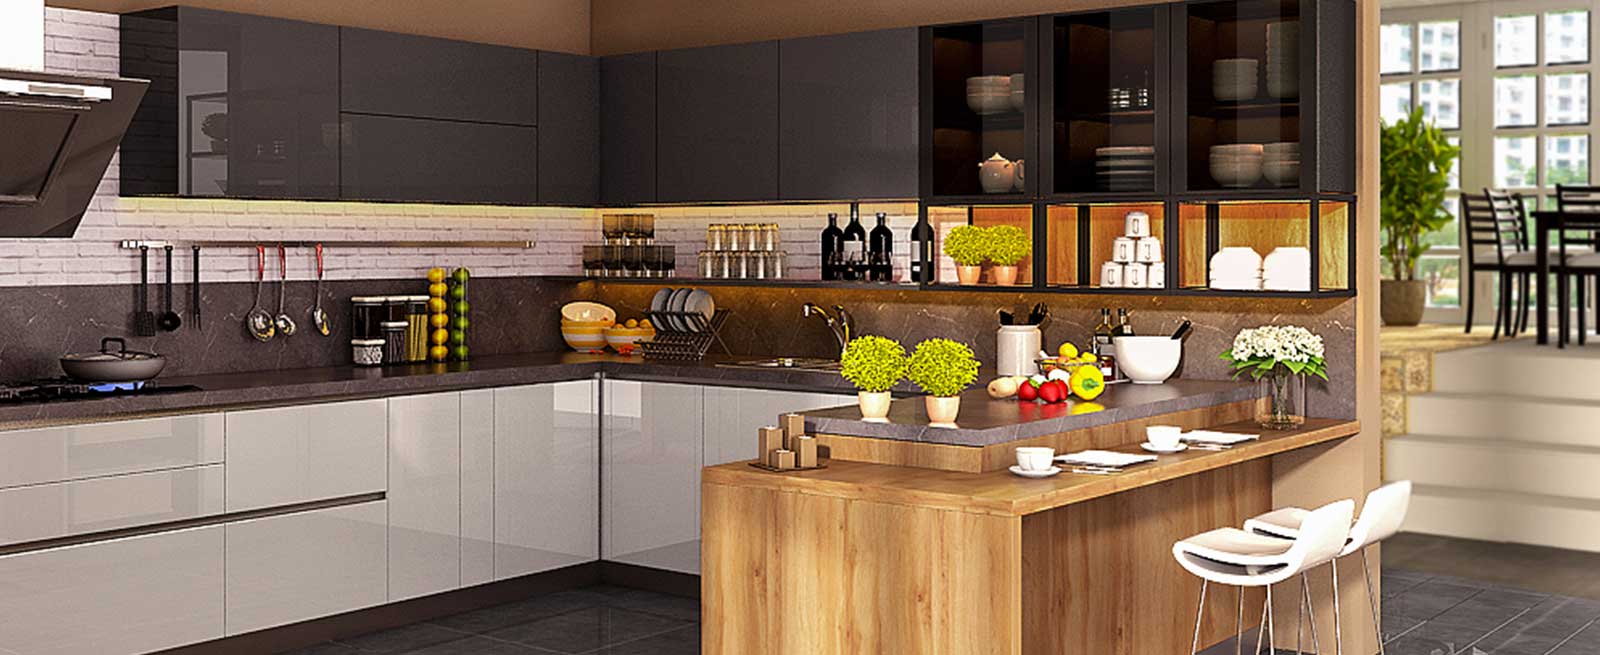 Modular Kitchen Designs New - qnalearn.com